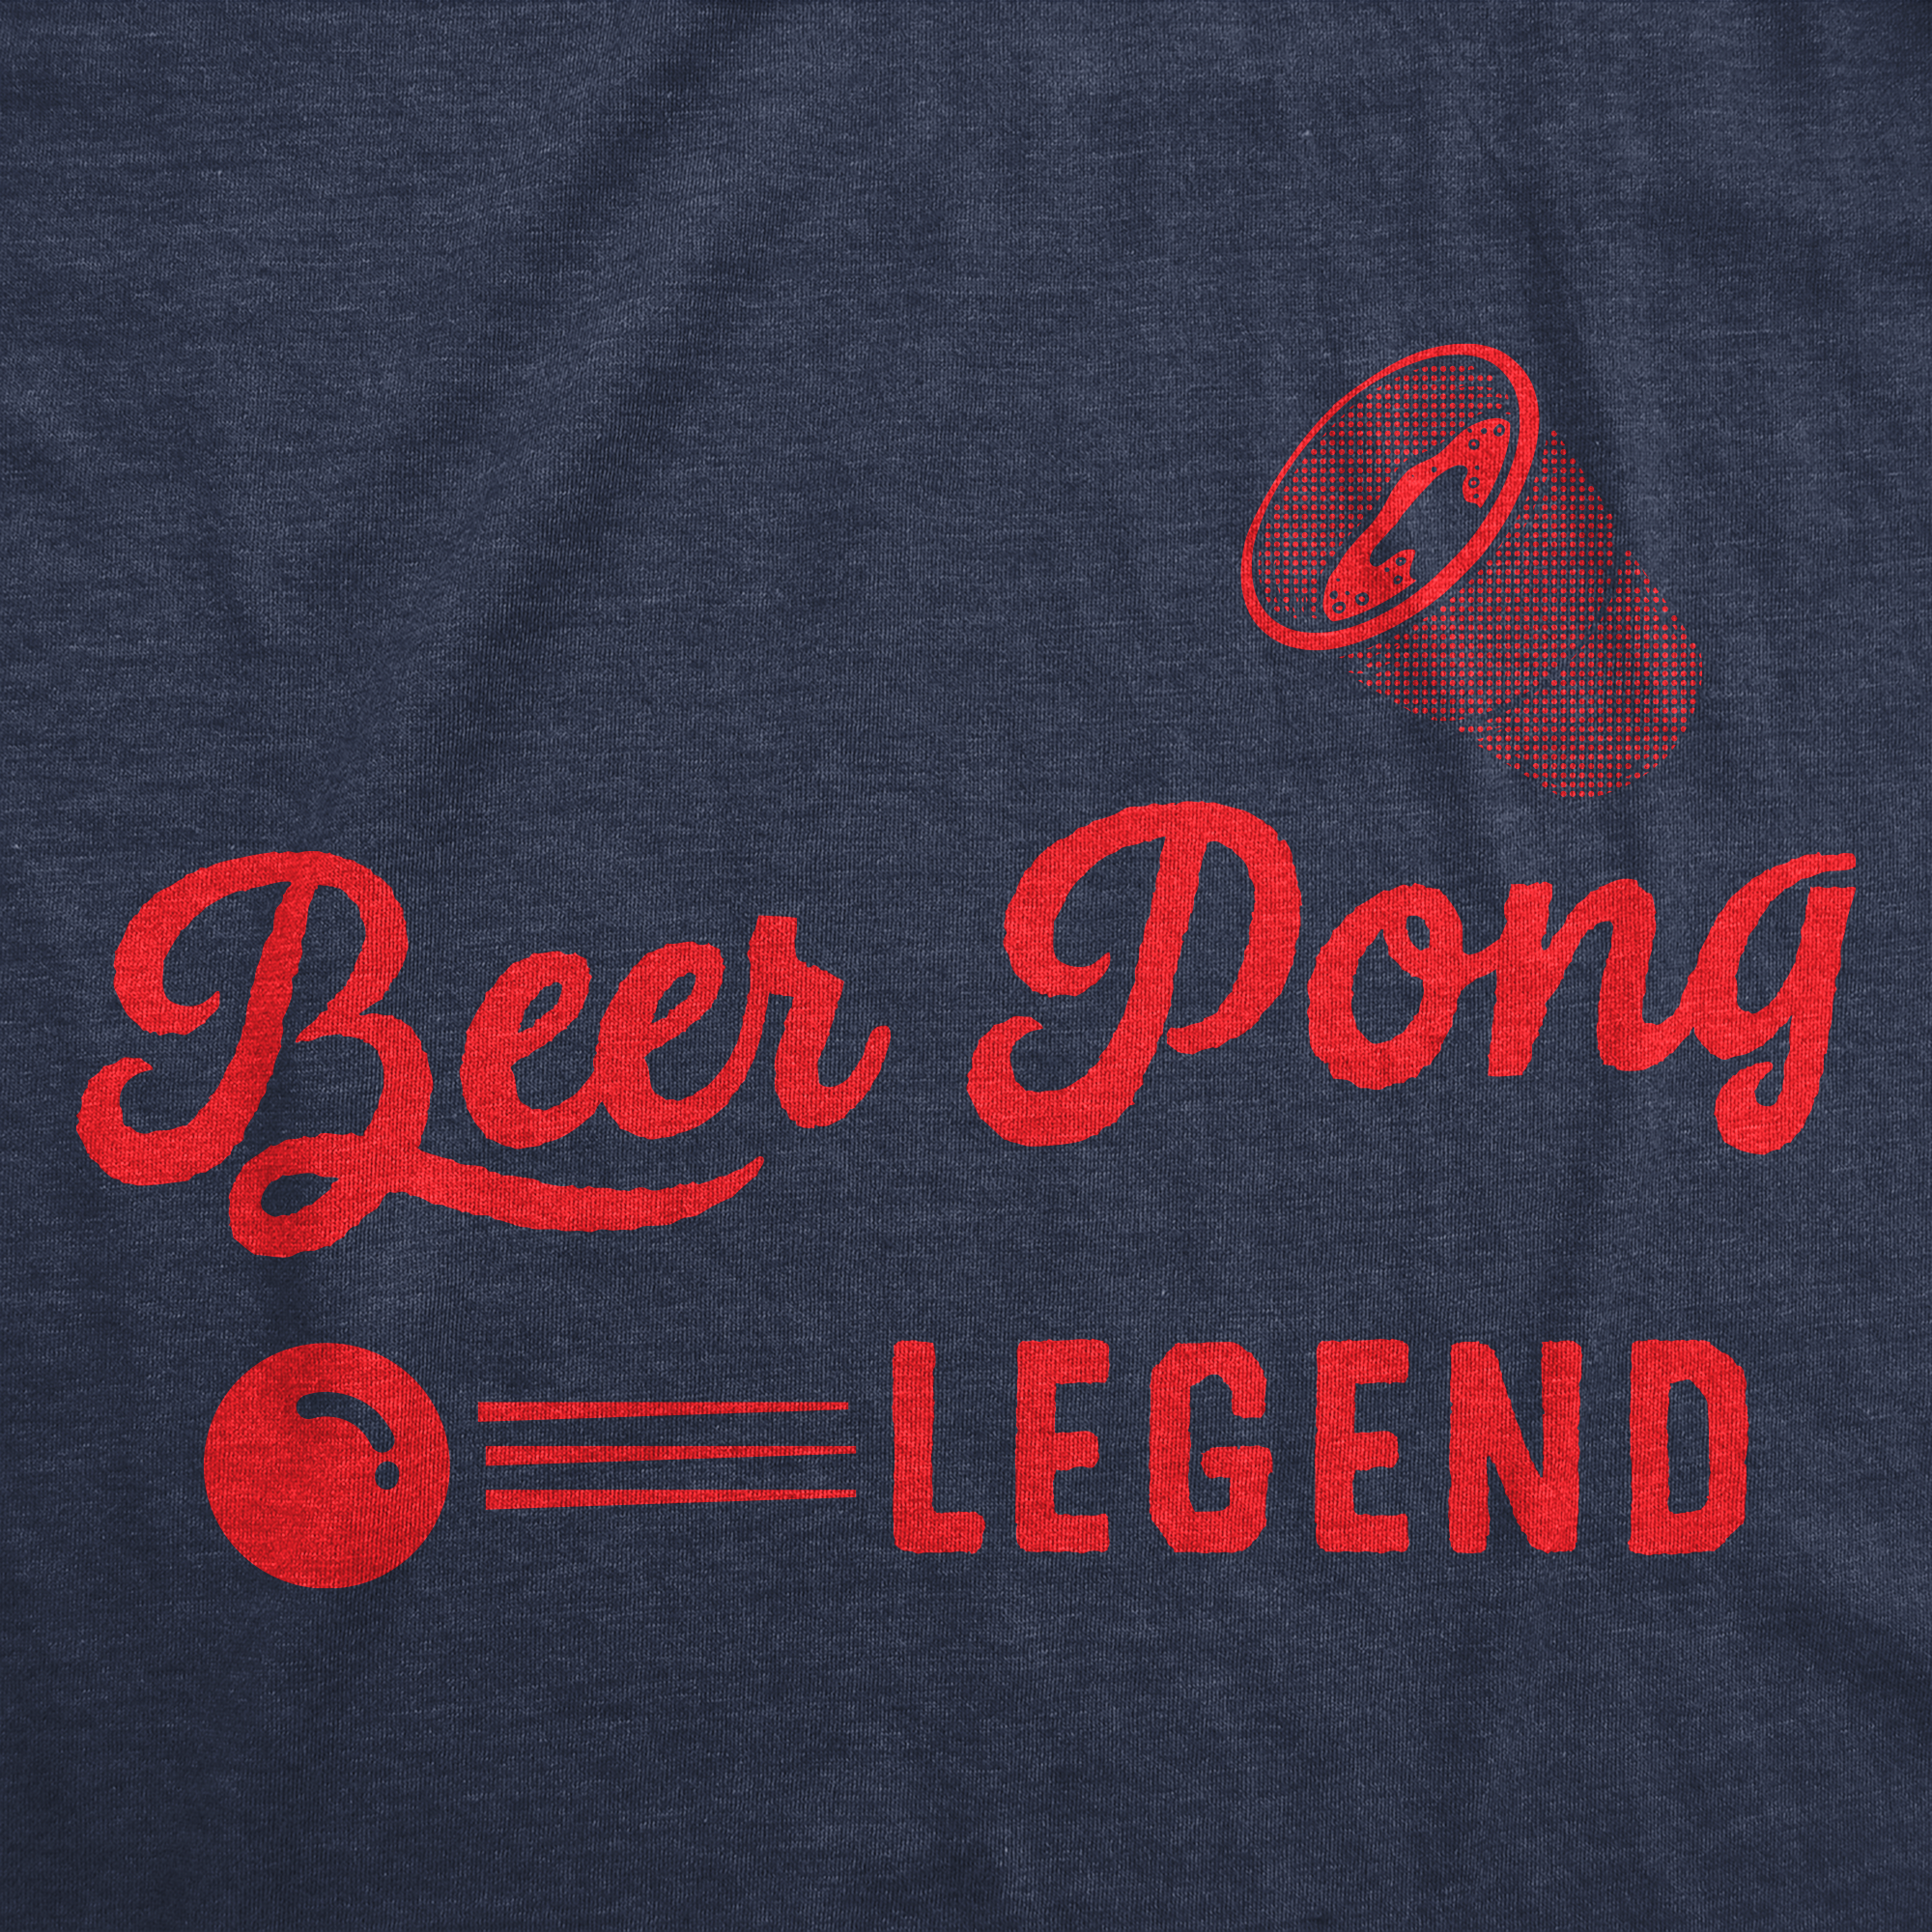 Funny Heather Navy - Beer Pong Legend Beer Pong Legend Mens T Shirt Nerdy Beer Drinking Tee